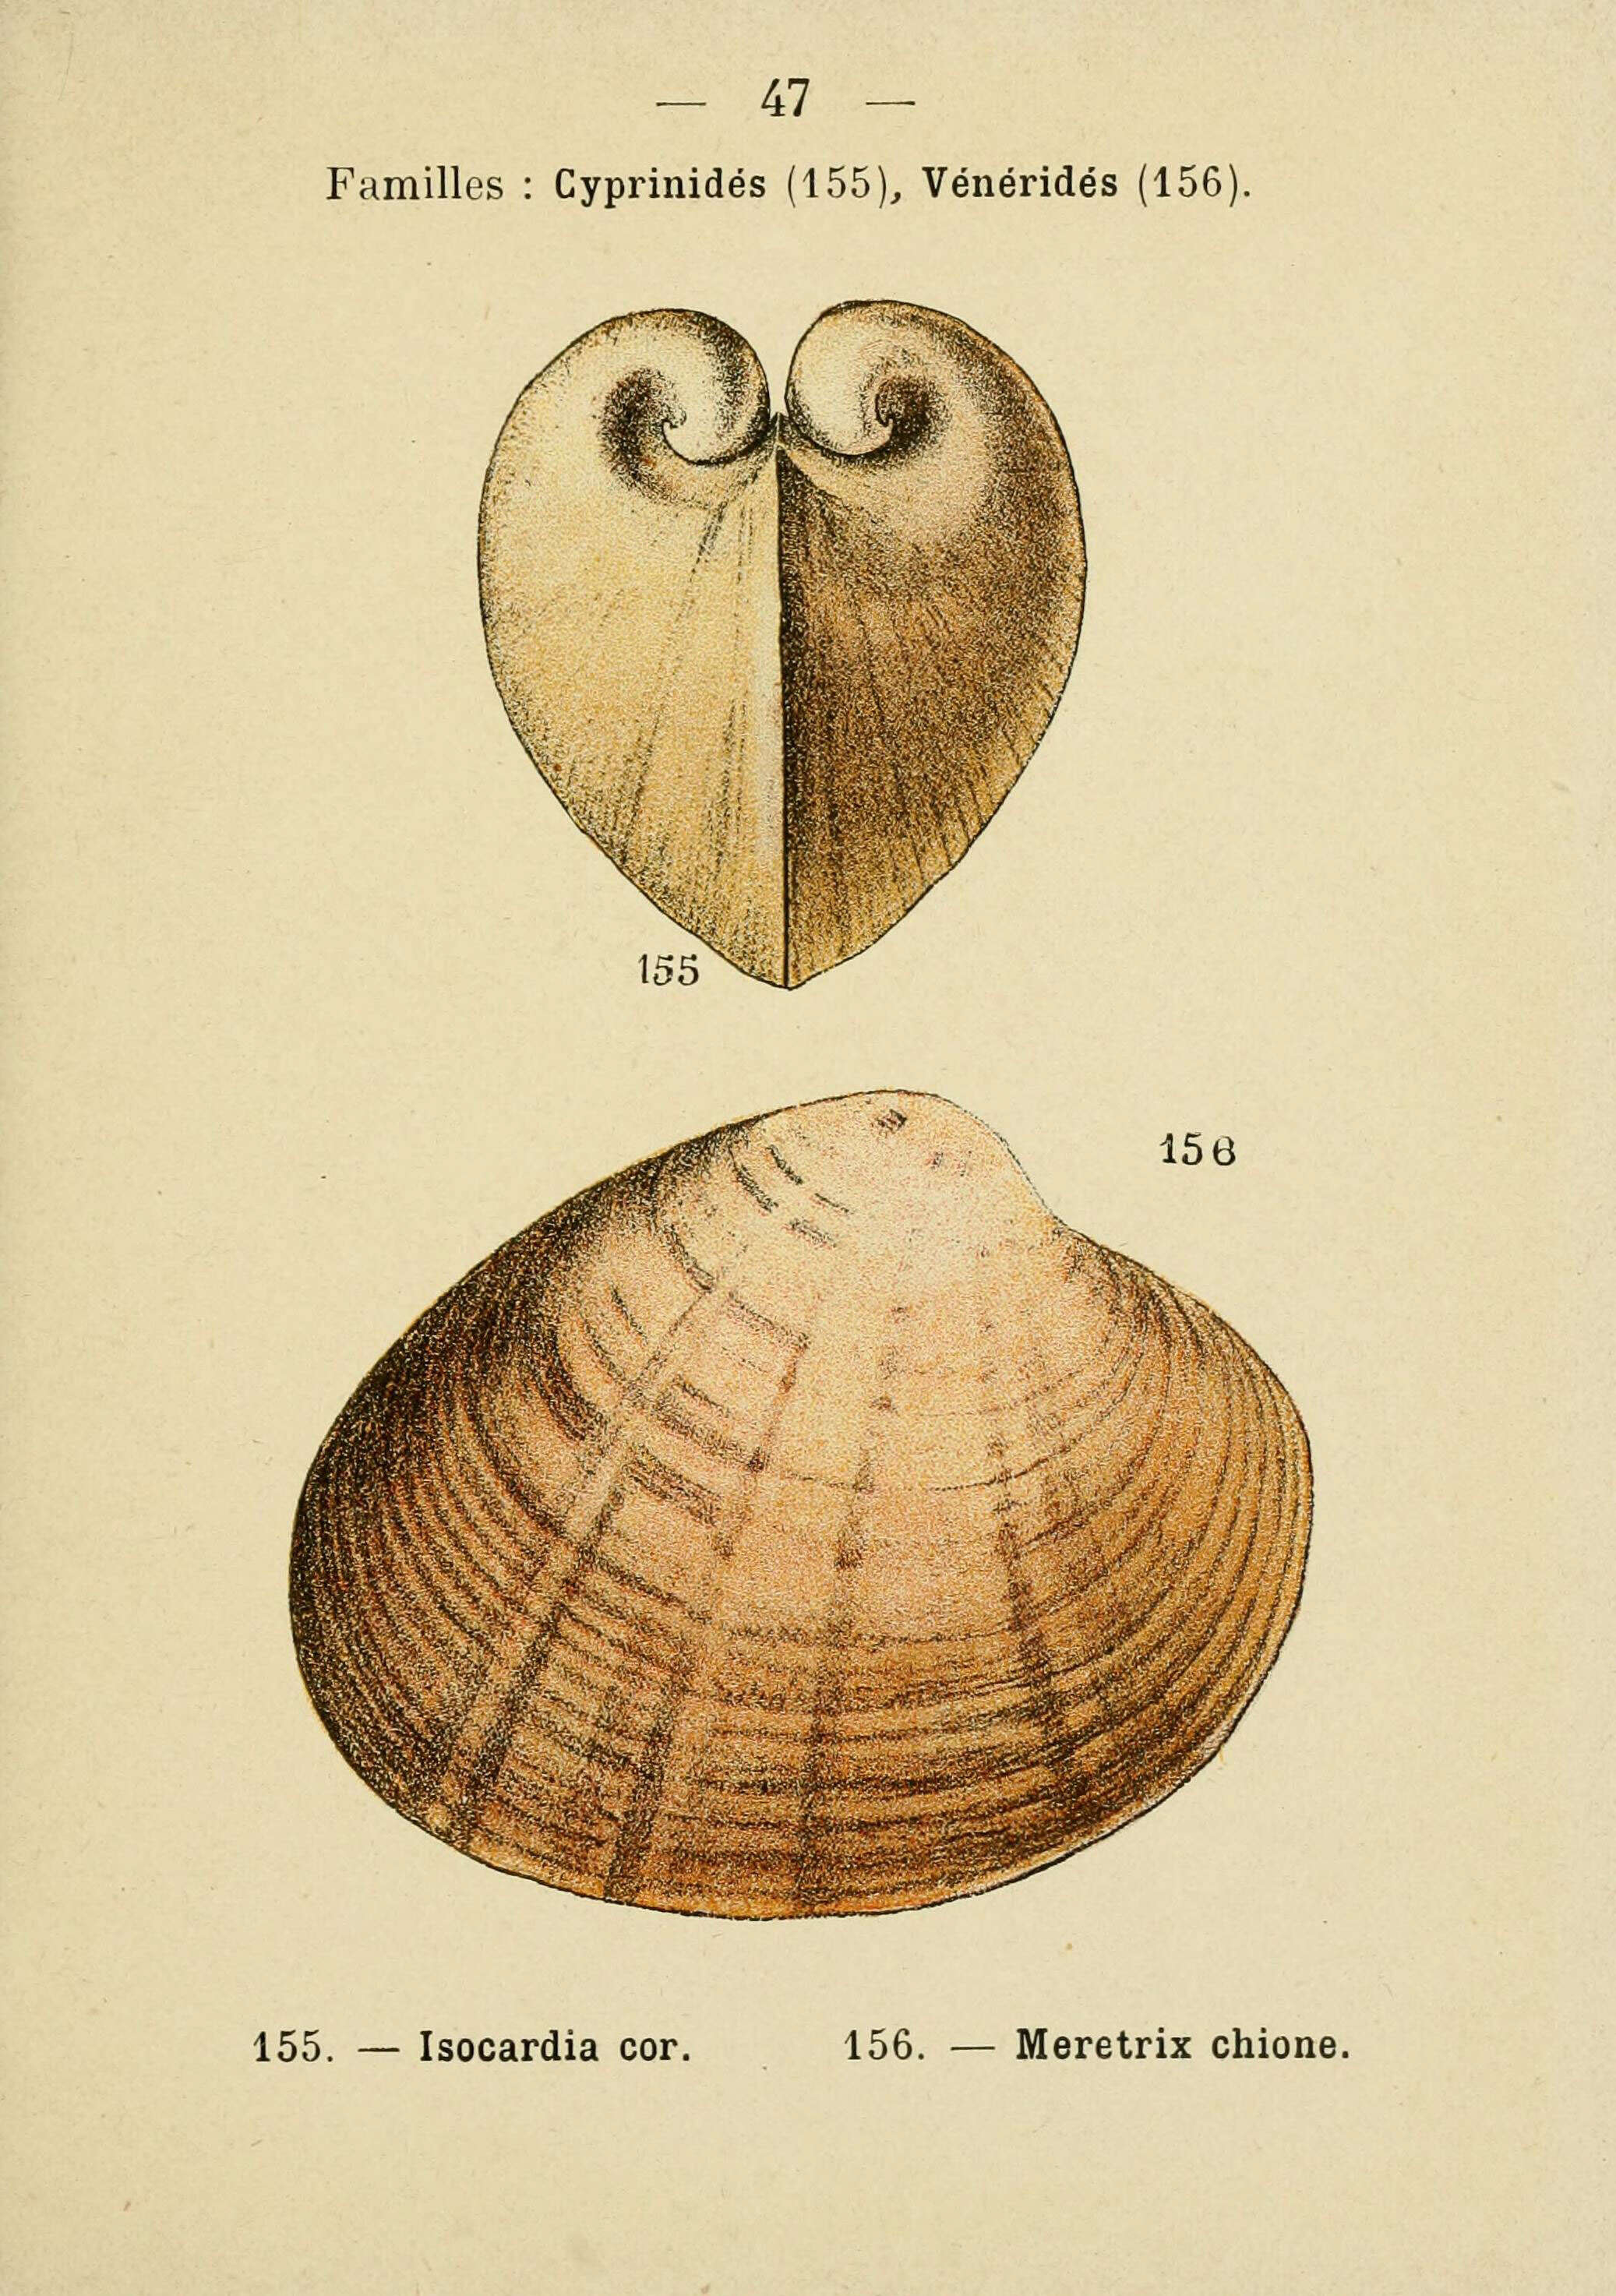 Glossus Poli 1795的圖片